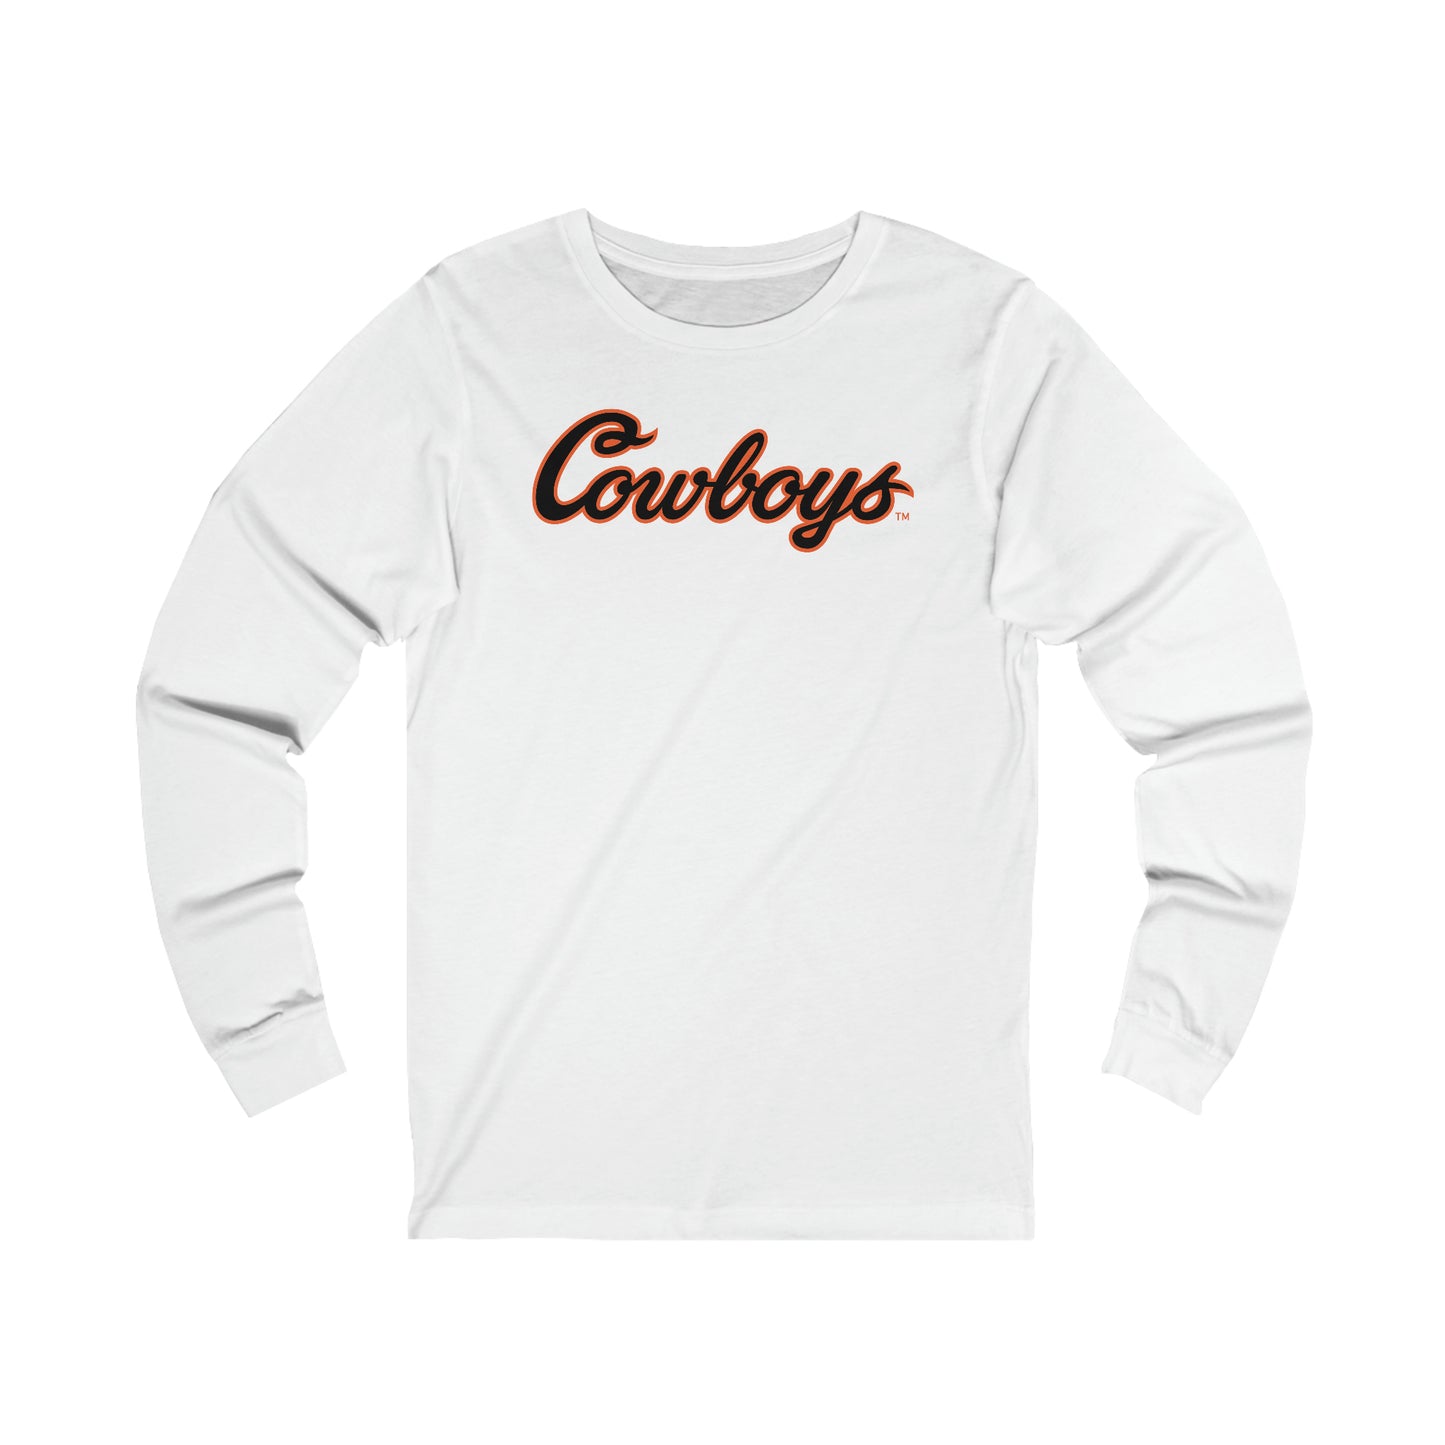 Jaxson Crull #5 Cursive Cowboys Long Sleeve T-Shirt